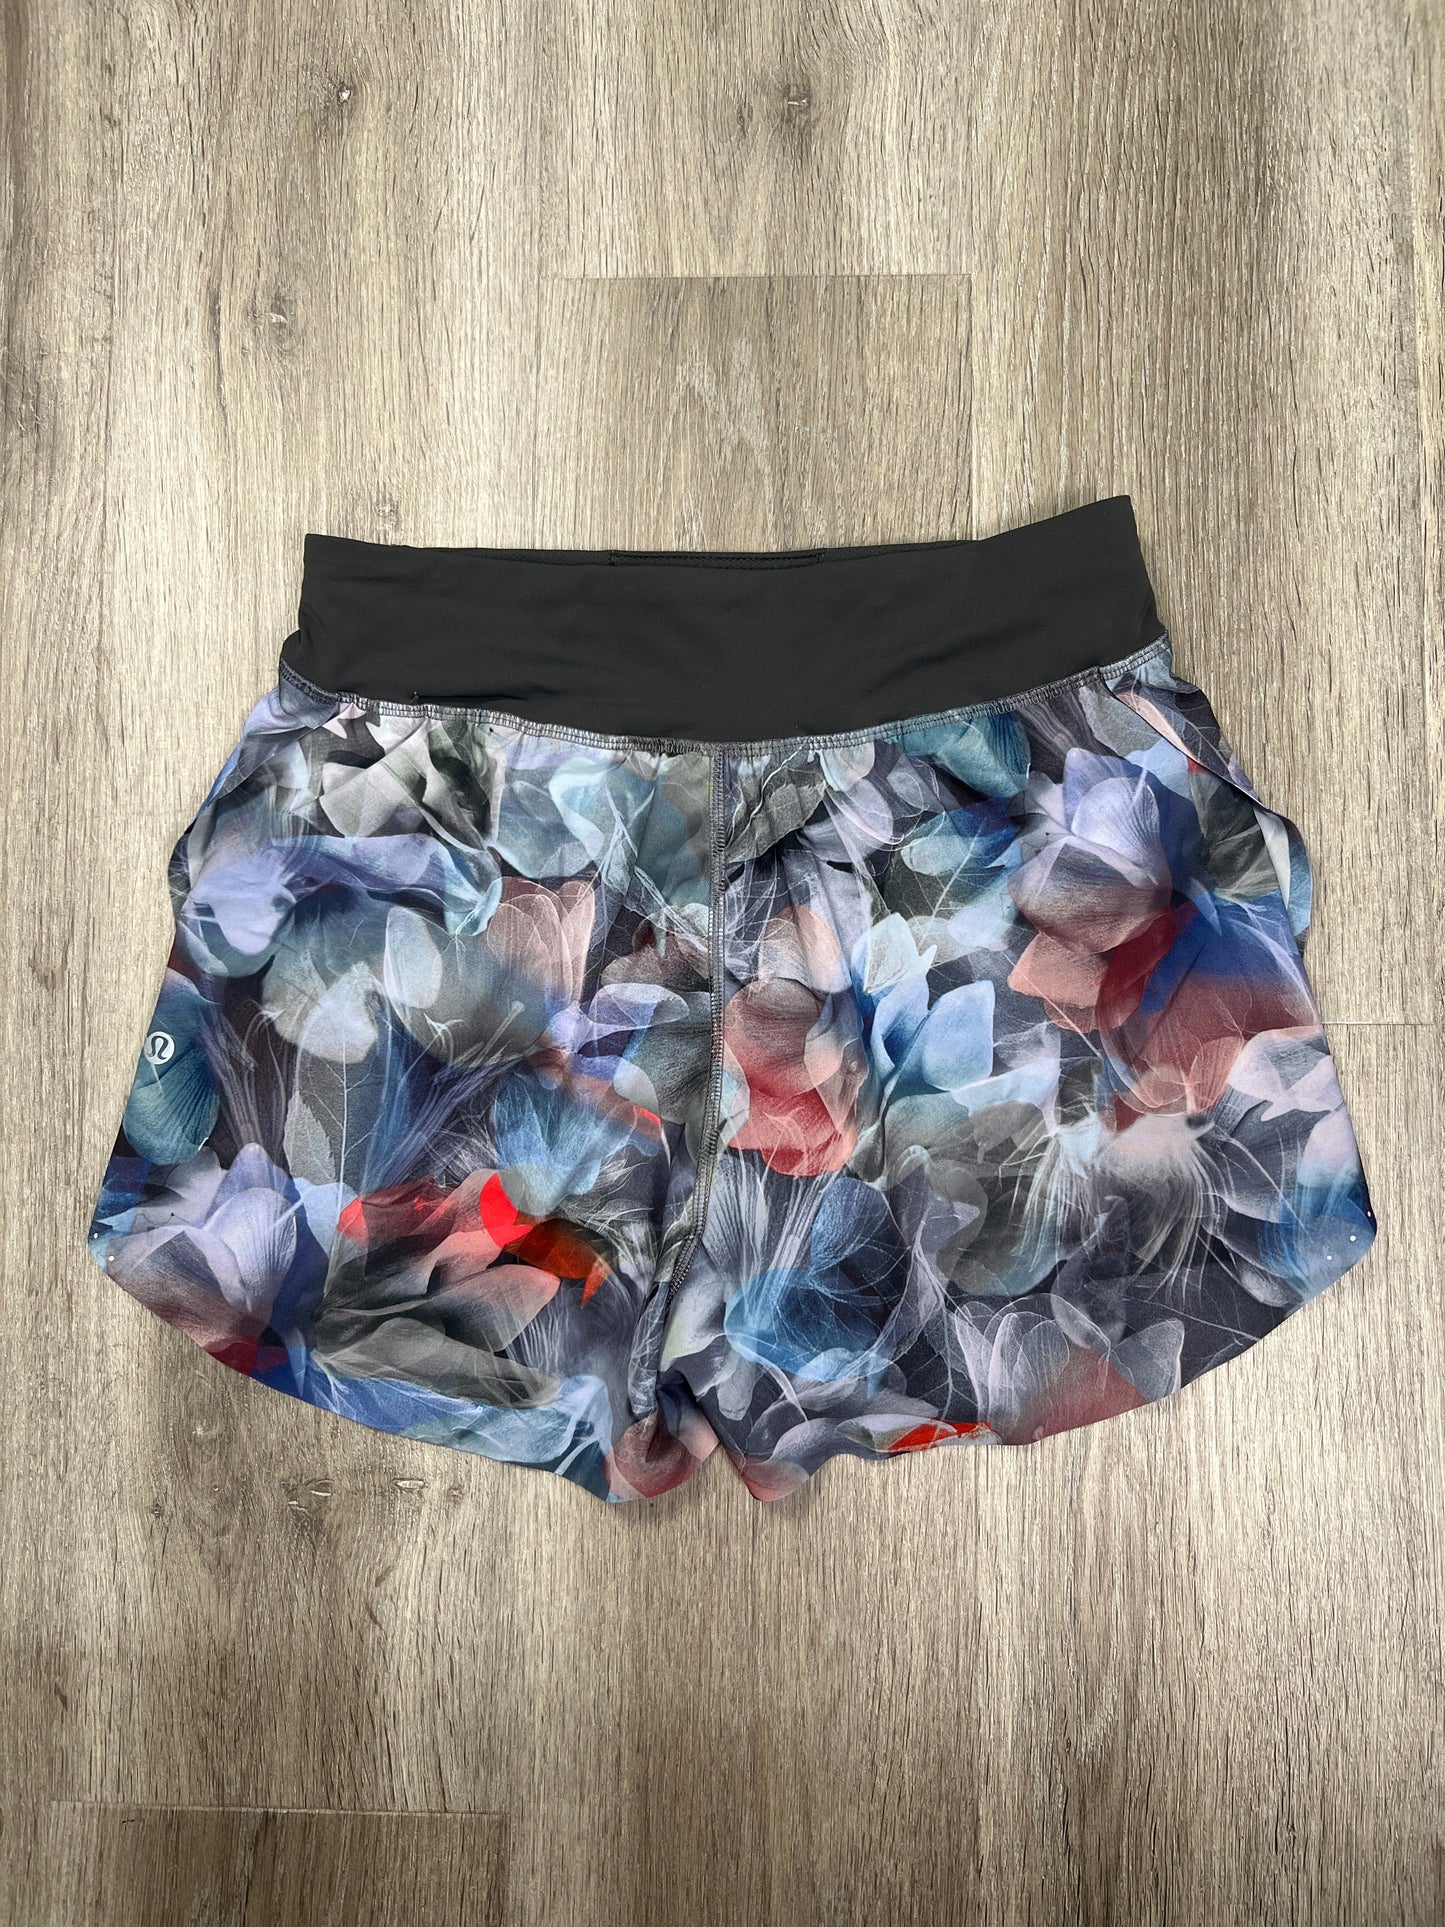 Floral Print Athletic Shorts Lululemon, Size S